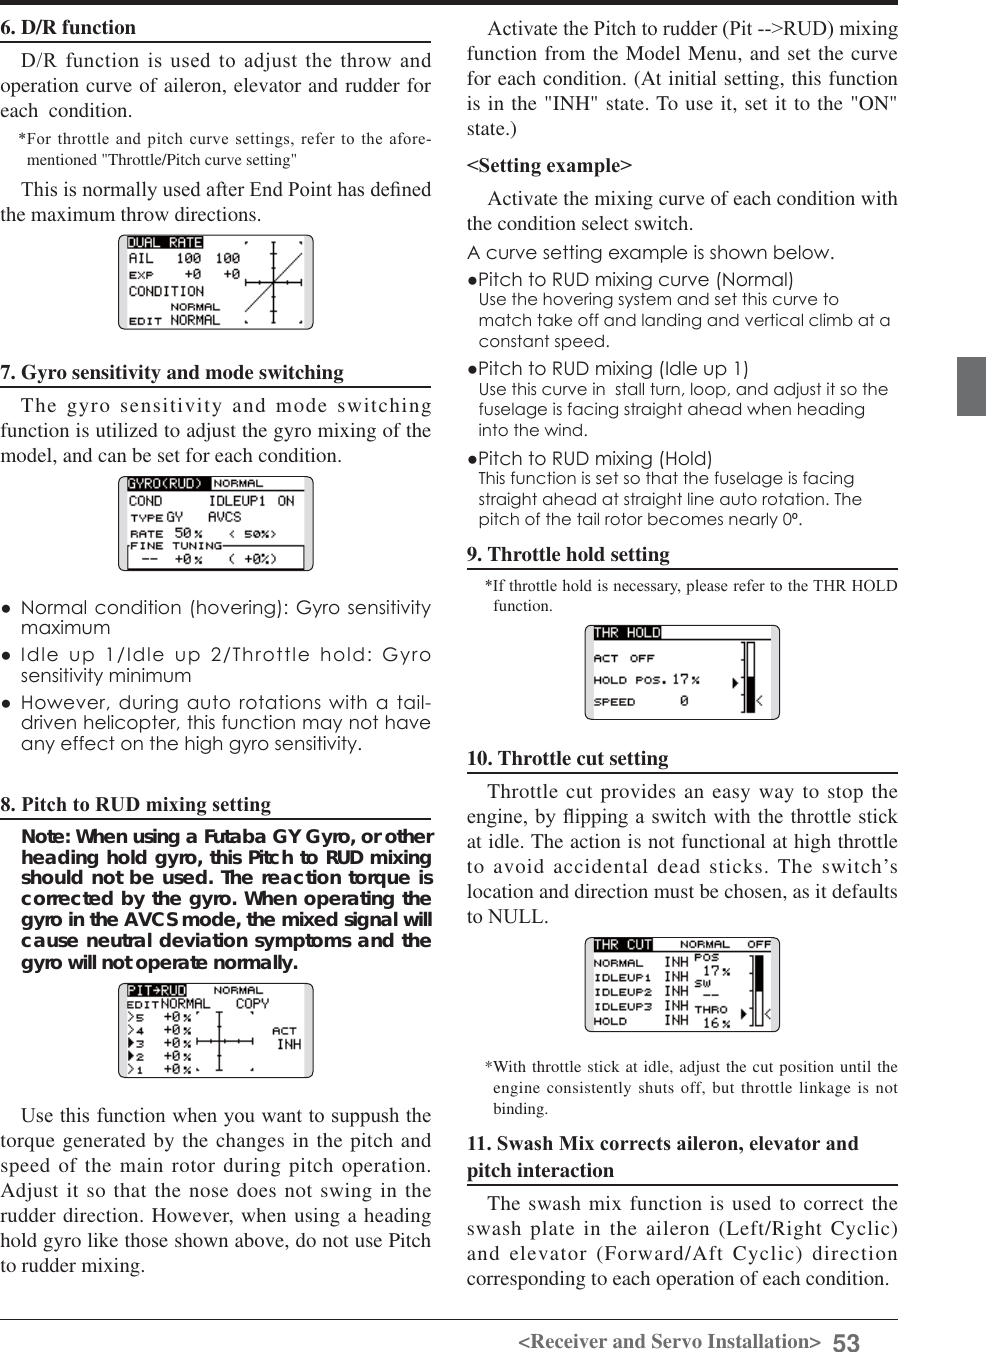 Page 53 of Futaba T12K-24G Radio Control User Manual 